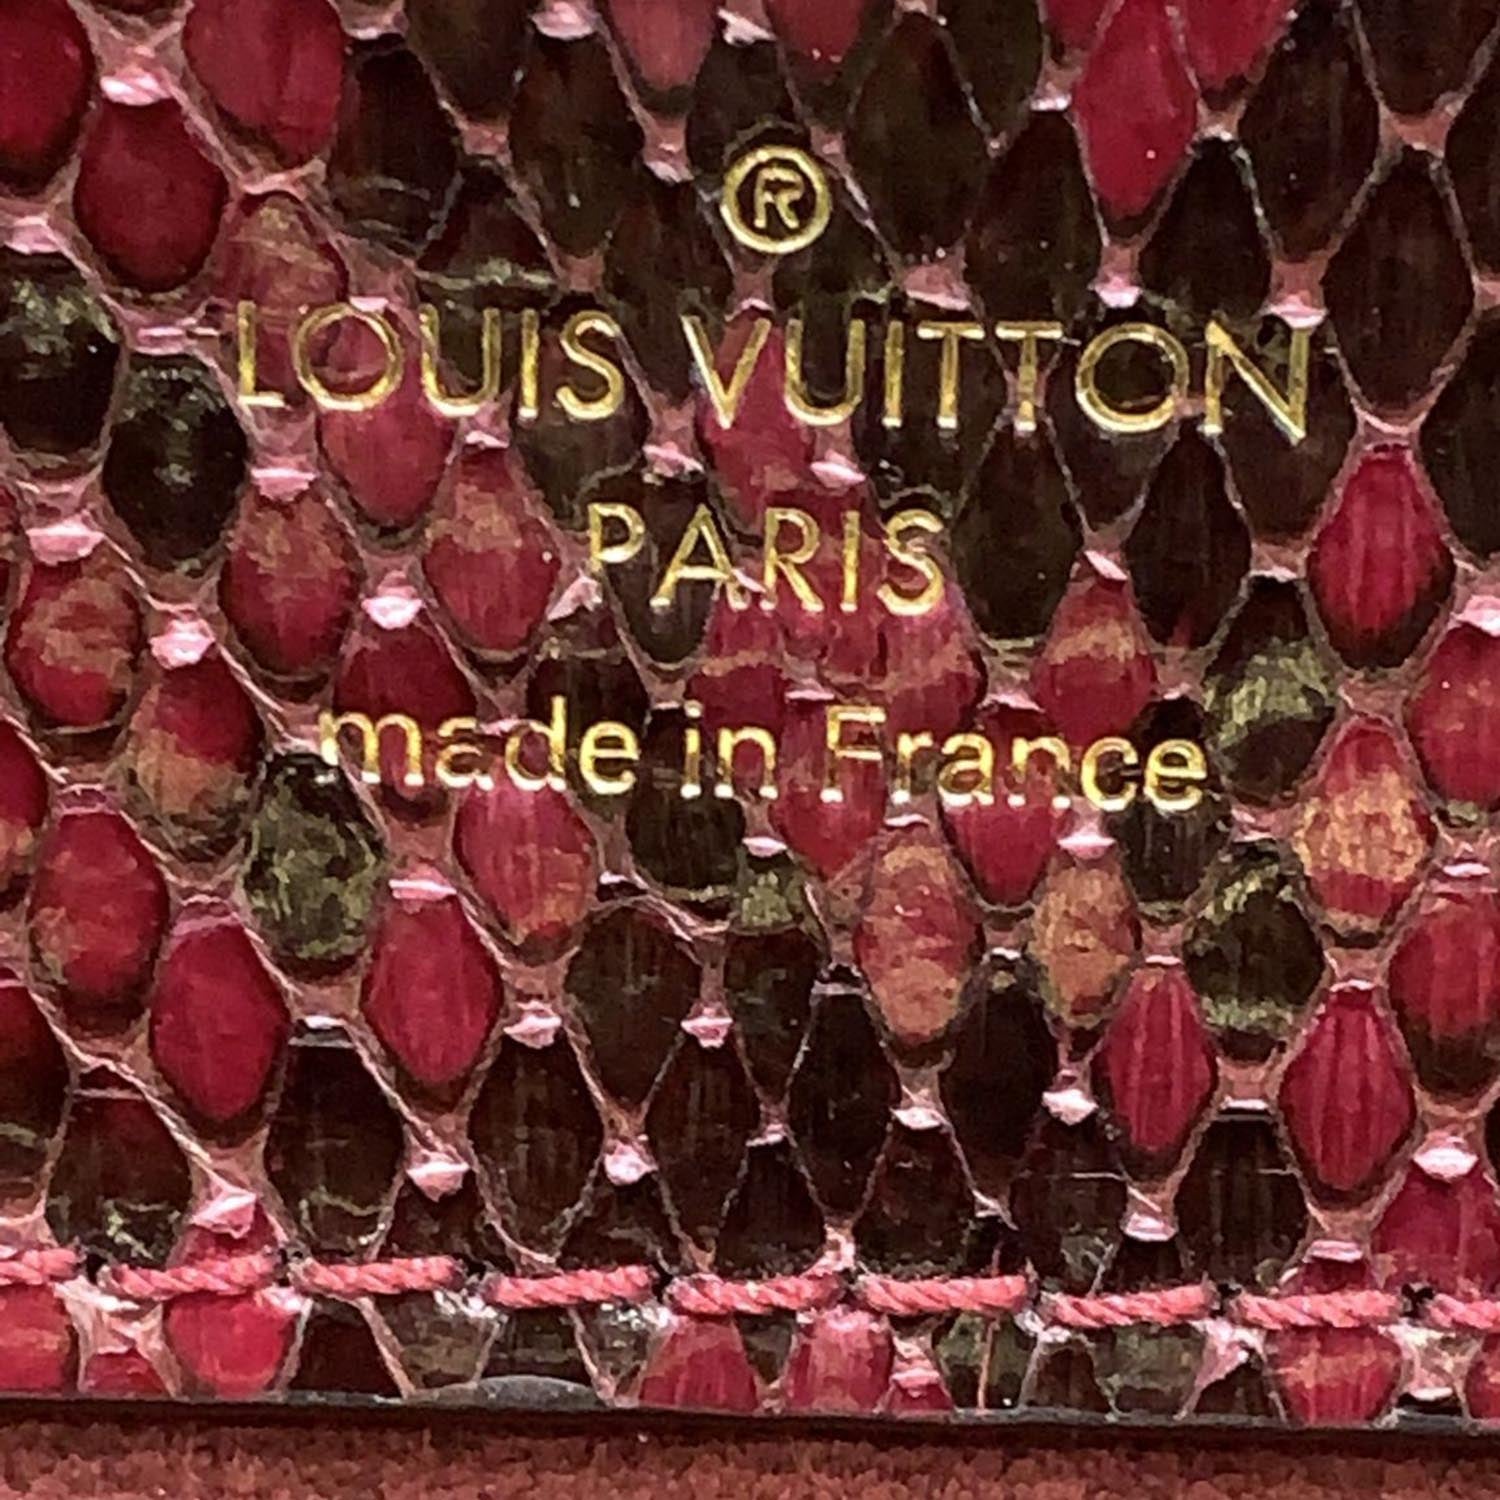 Brown Louis Vuitton Monogram Venus Satchel – Designer Revival